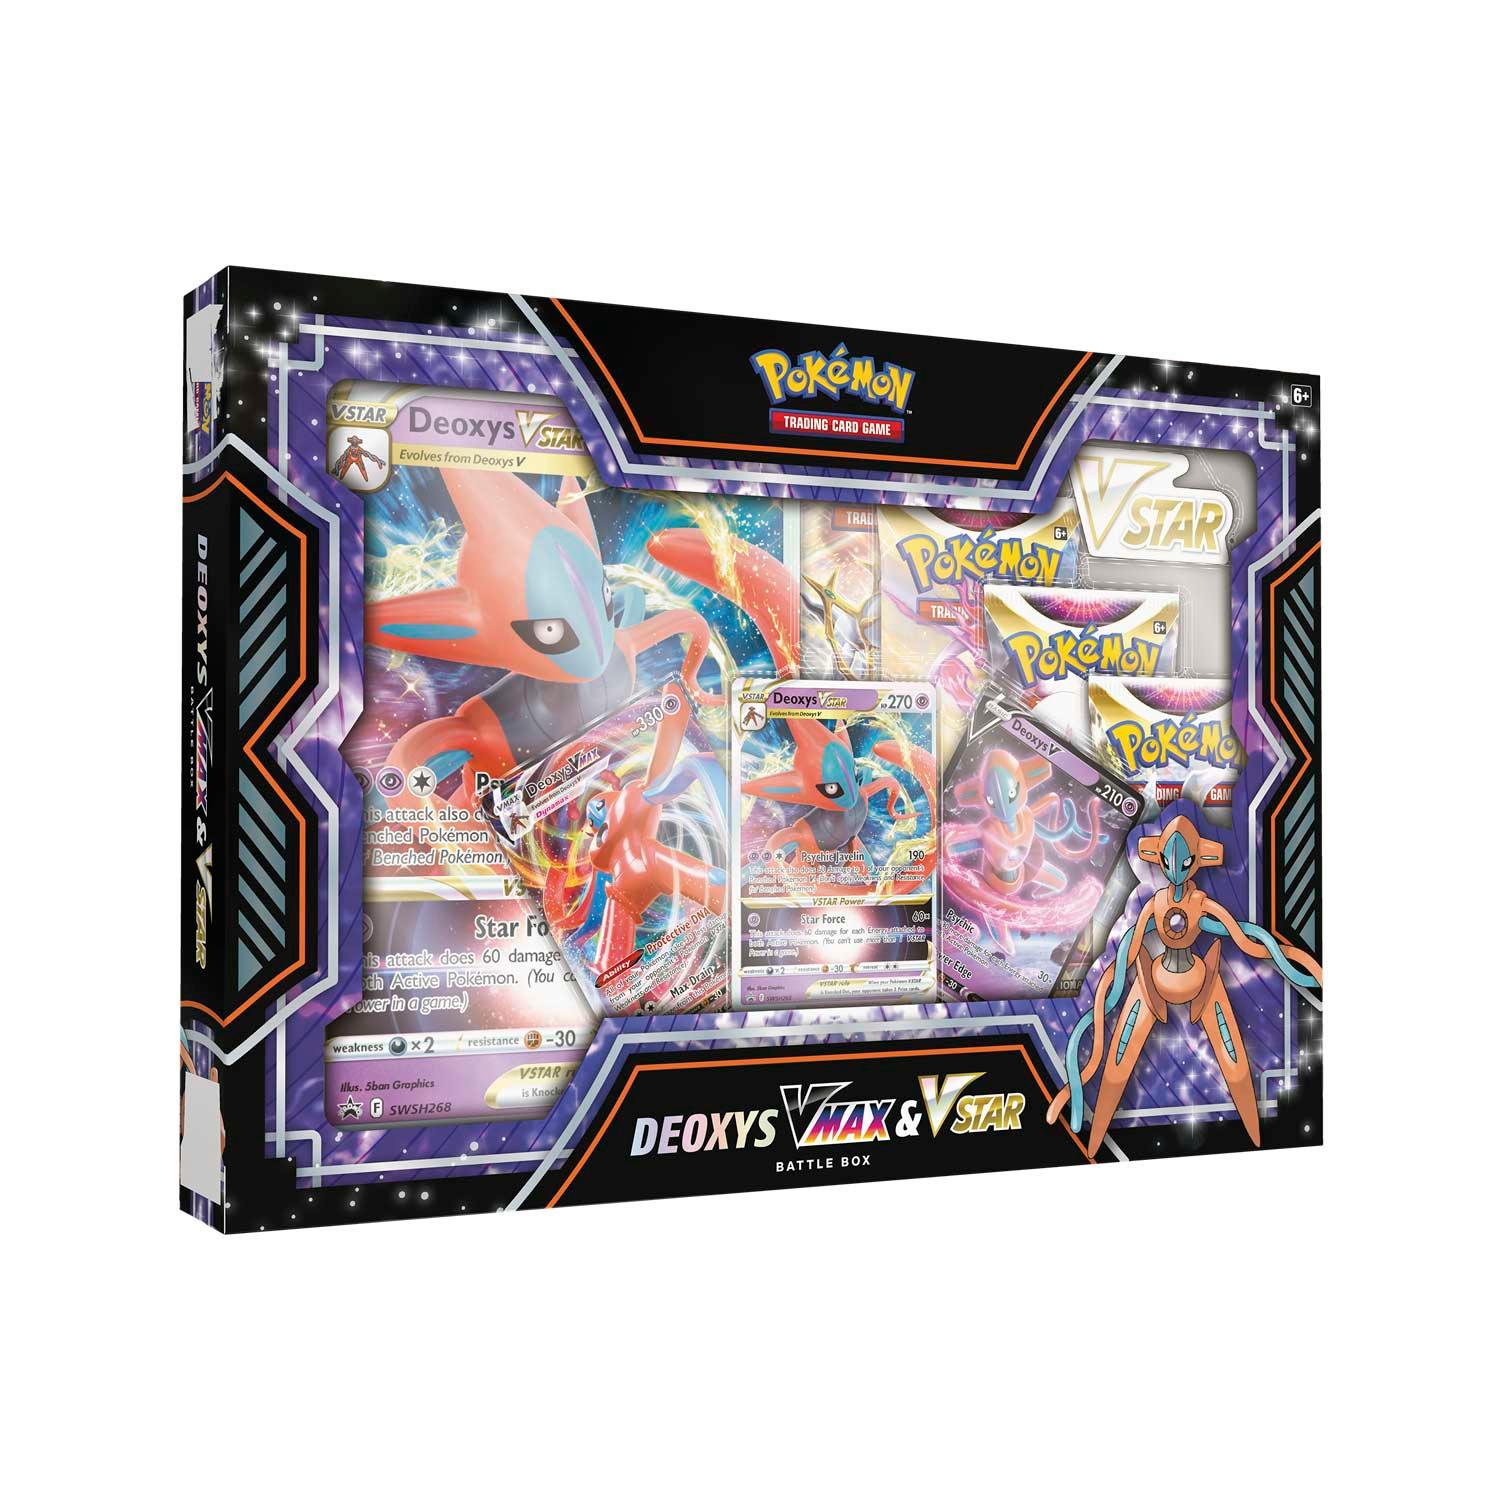 Pokemon Box - Deoxys VMAX & VSTAR Battle Box - Hobby Champion Inc